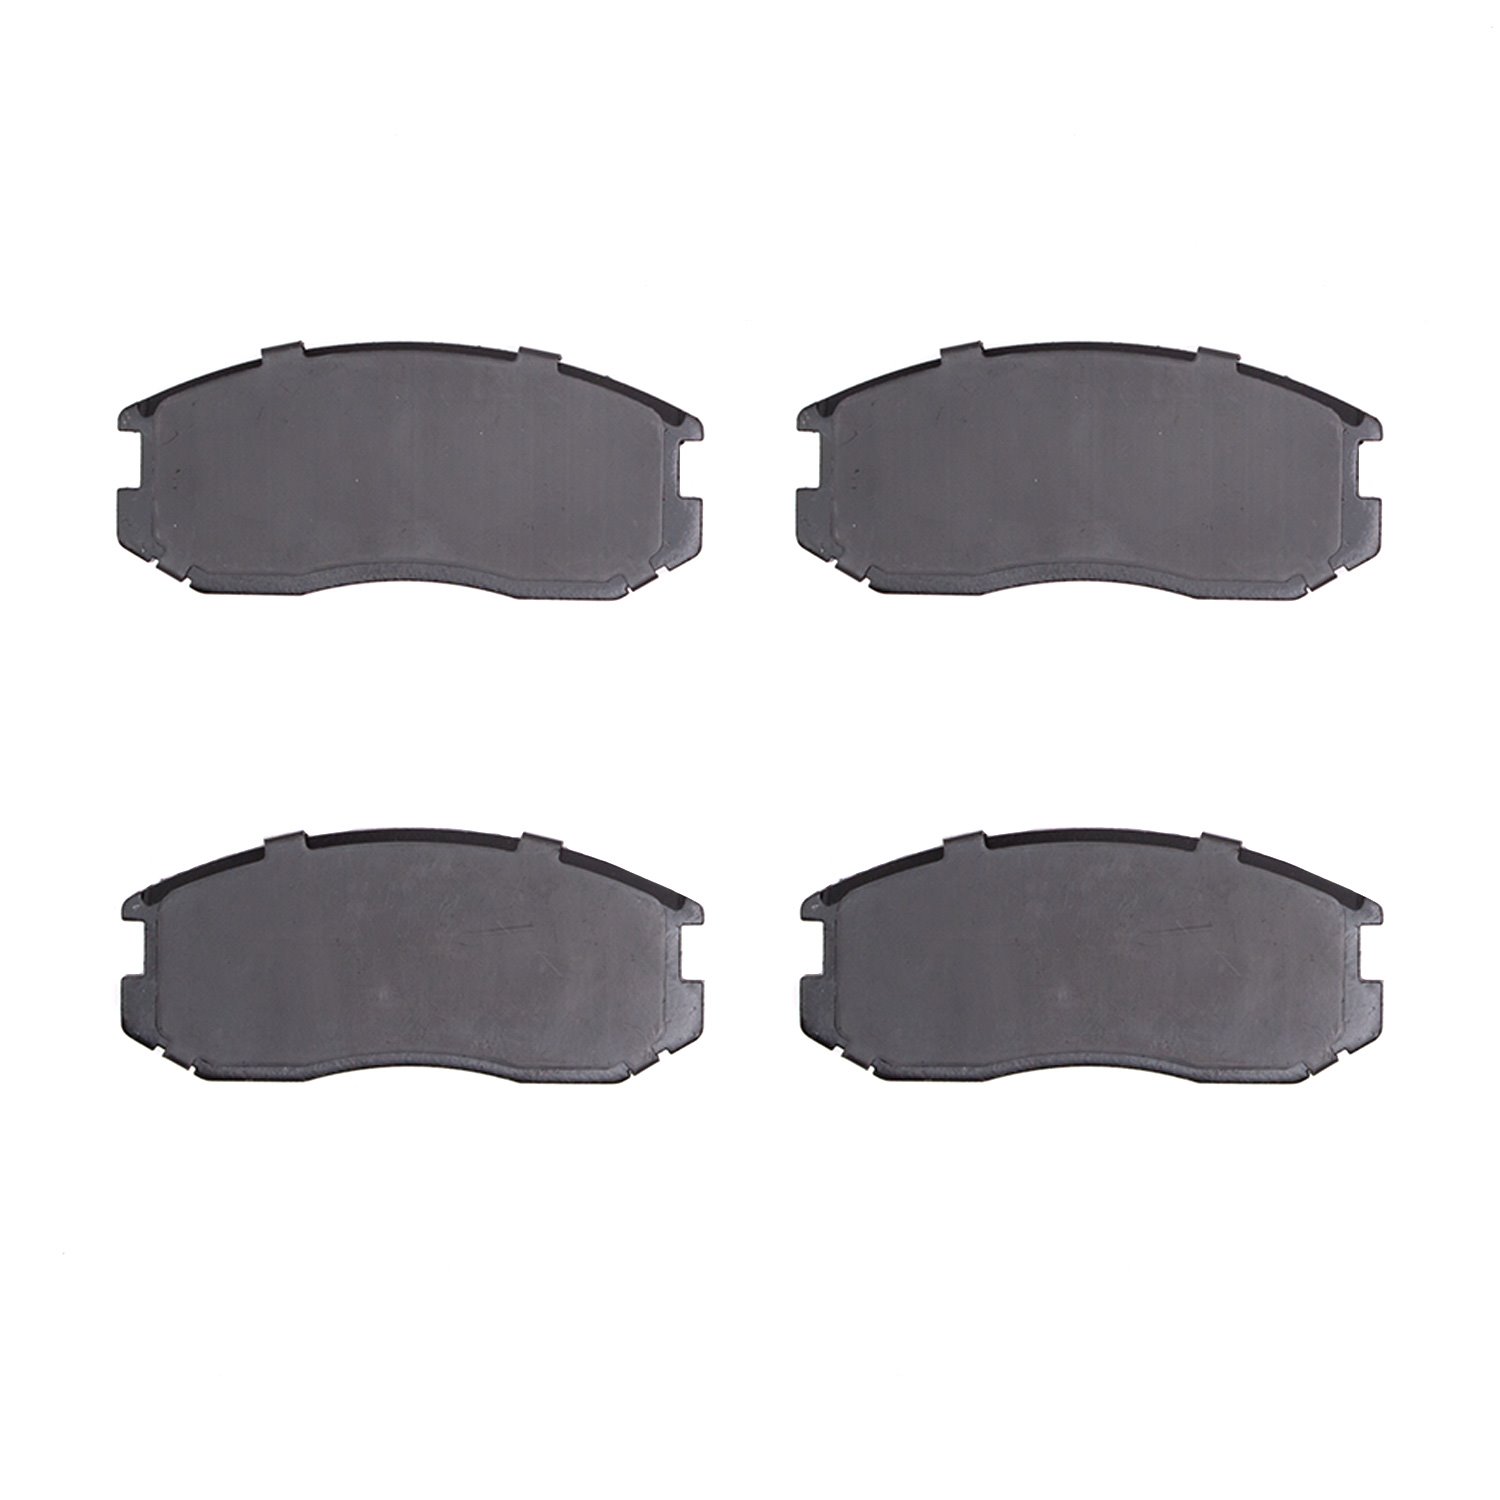 1310-0602-00 3000-Series Ceramic Brake Pads, 1991-2000 Multiple Makes/Models, Position: Front